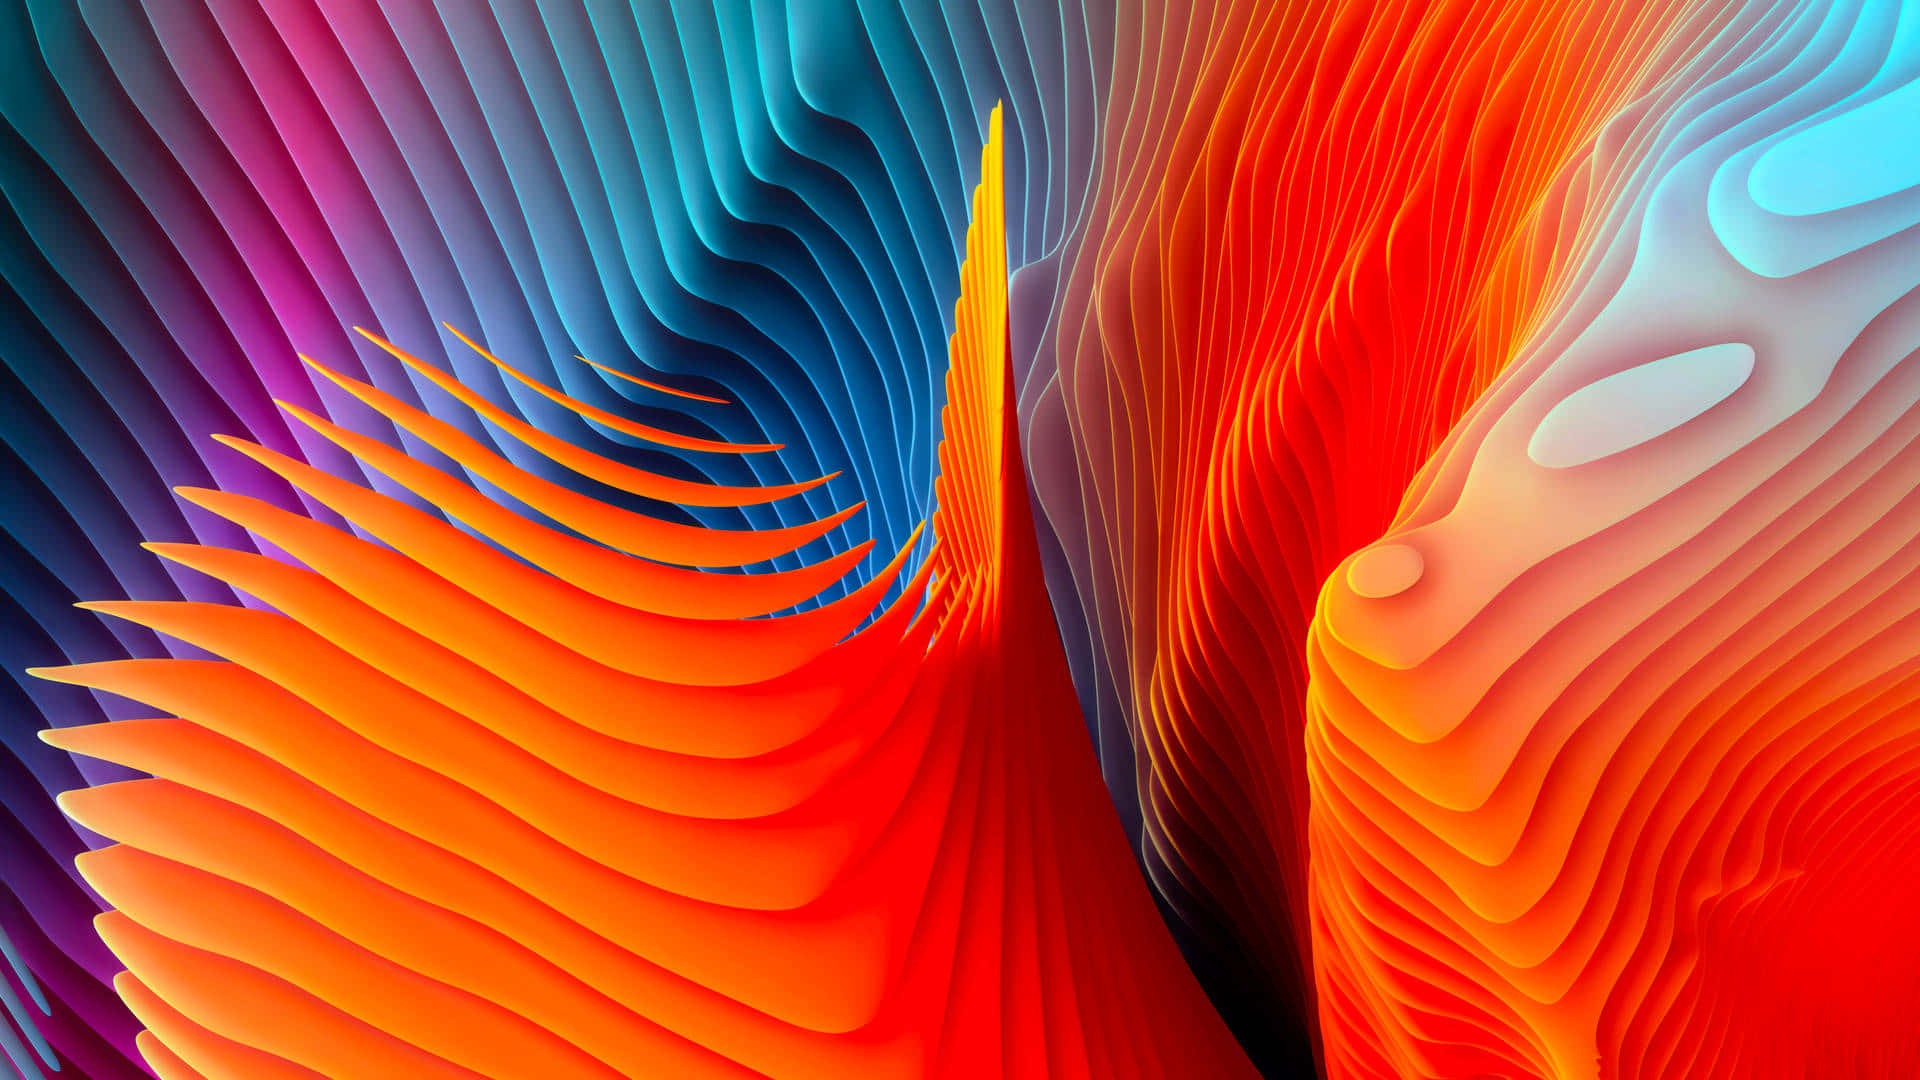 Stunning macOS Big Sur Desktop Wallpaper